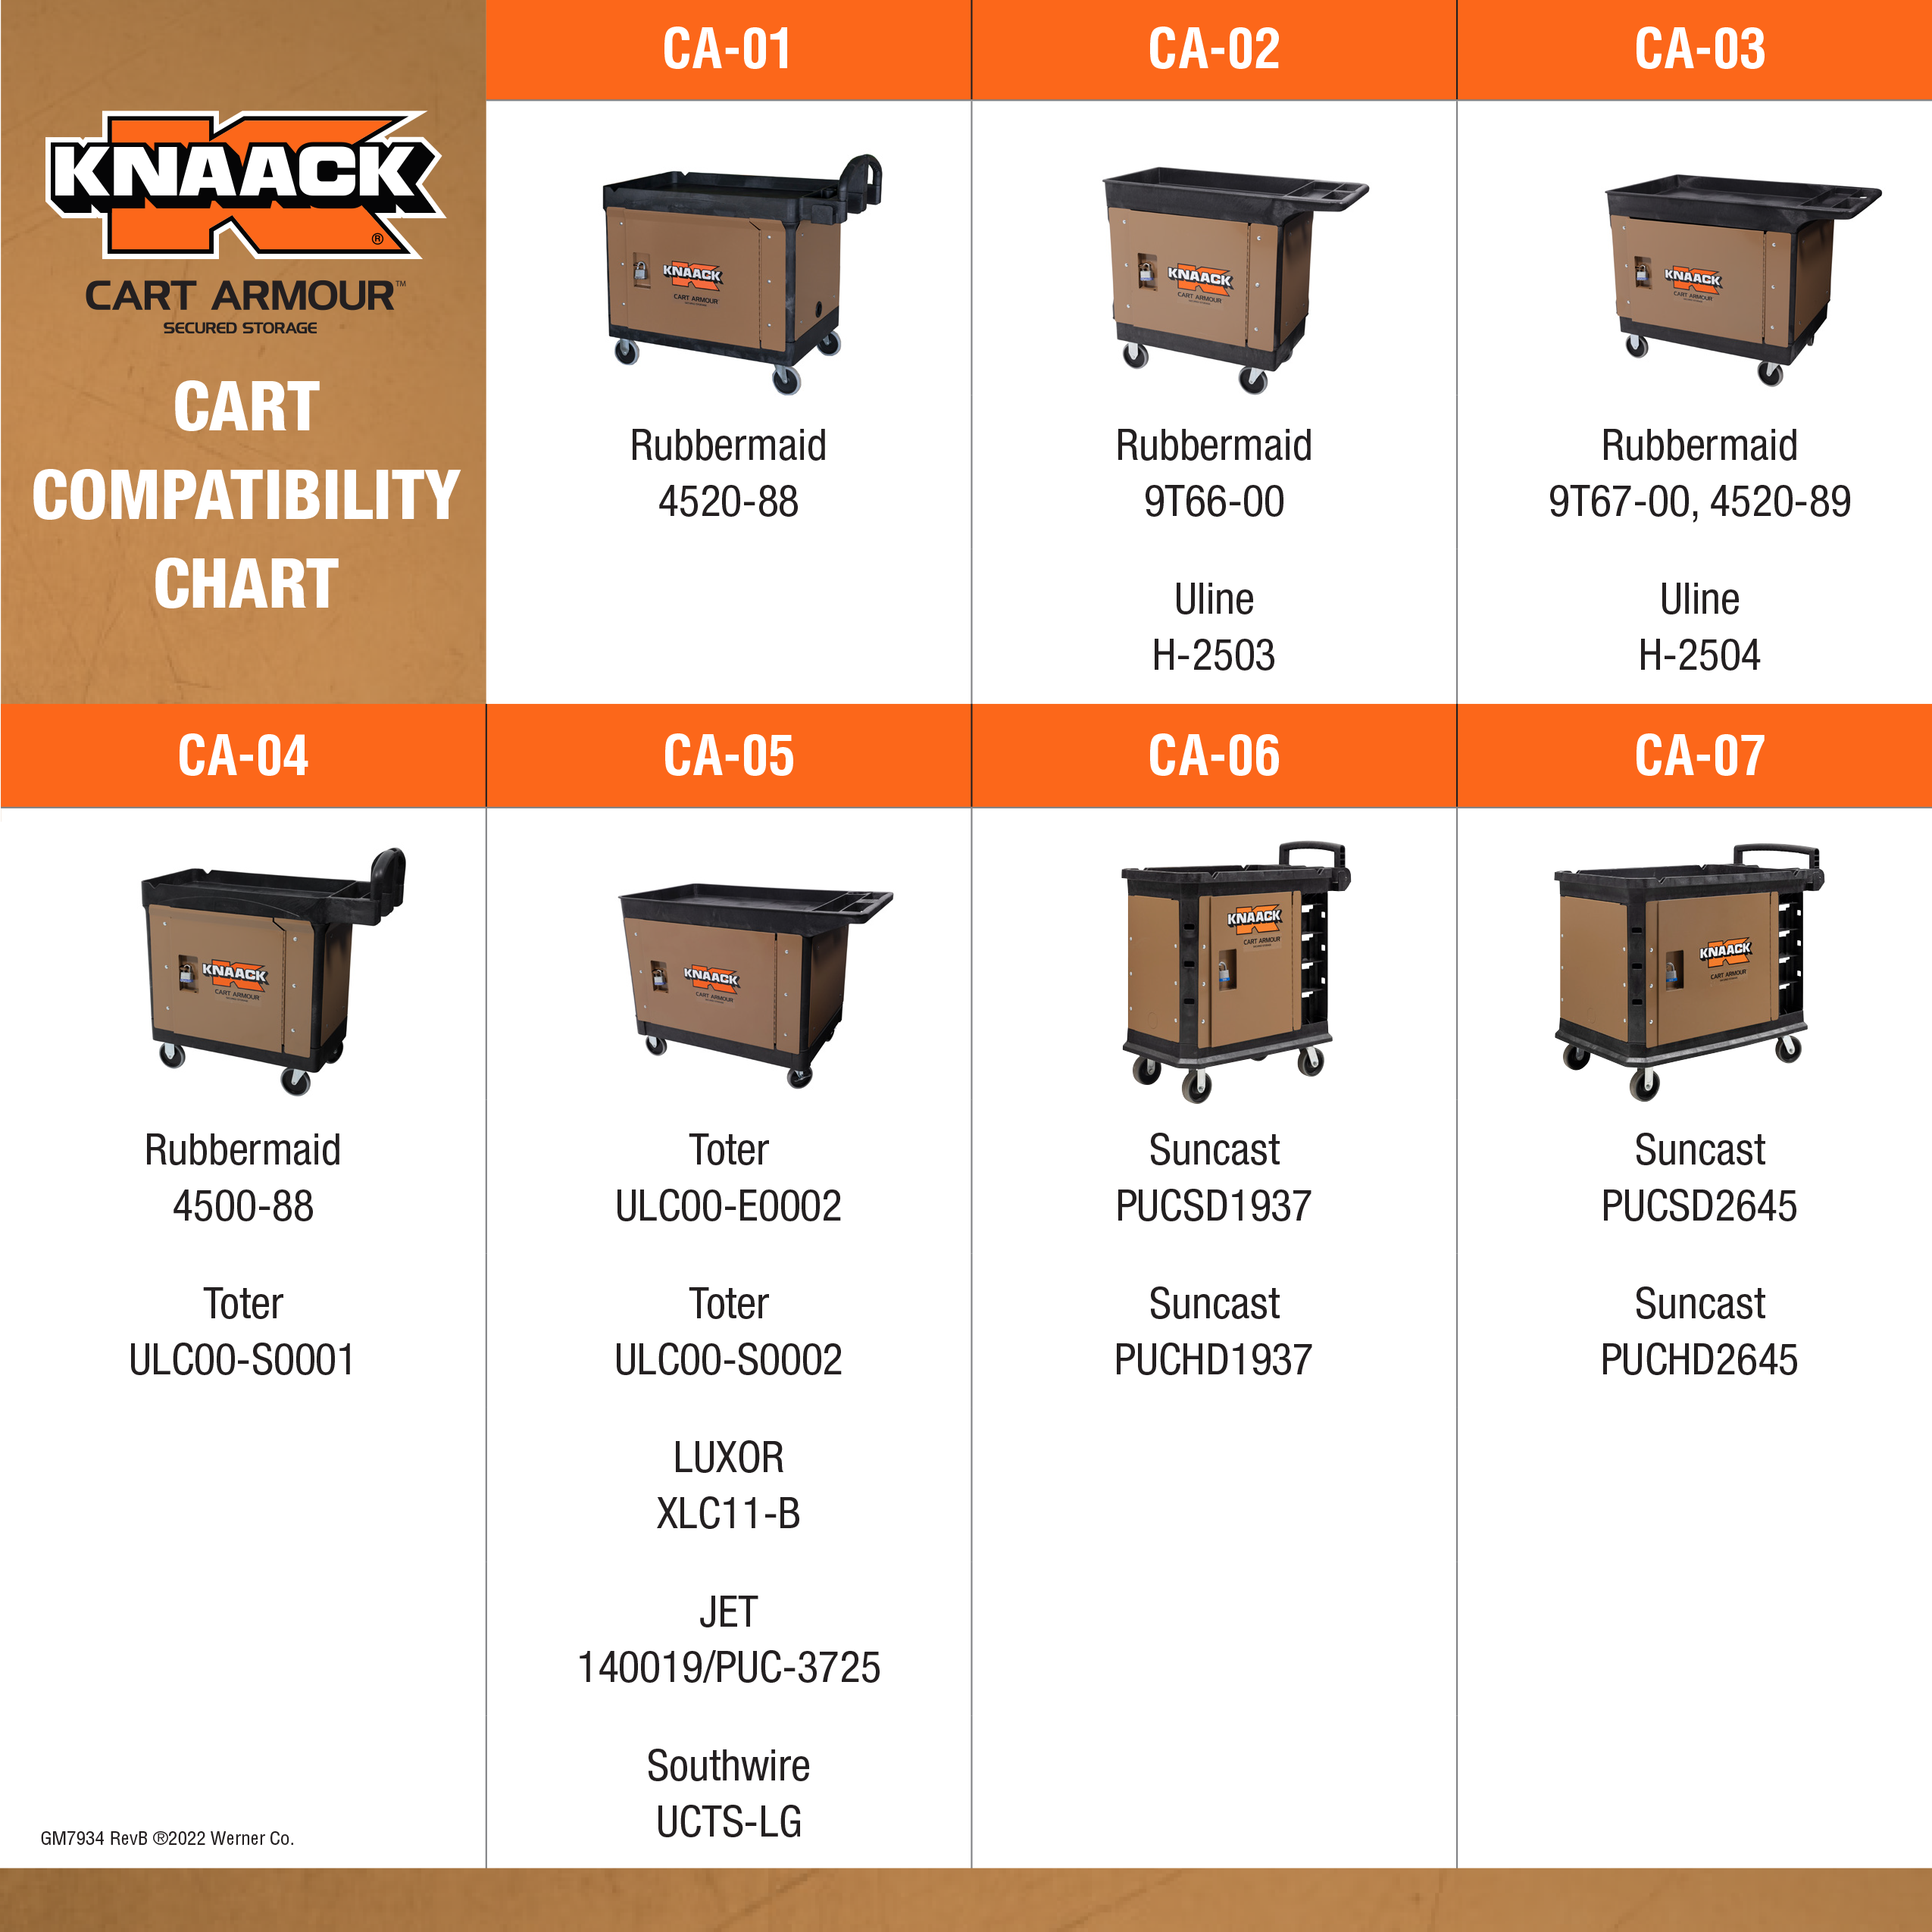 Knaack Model CA-04 Cart Armour  fits Rubbermaid* cart model 4500